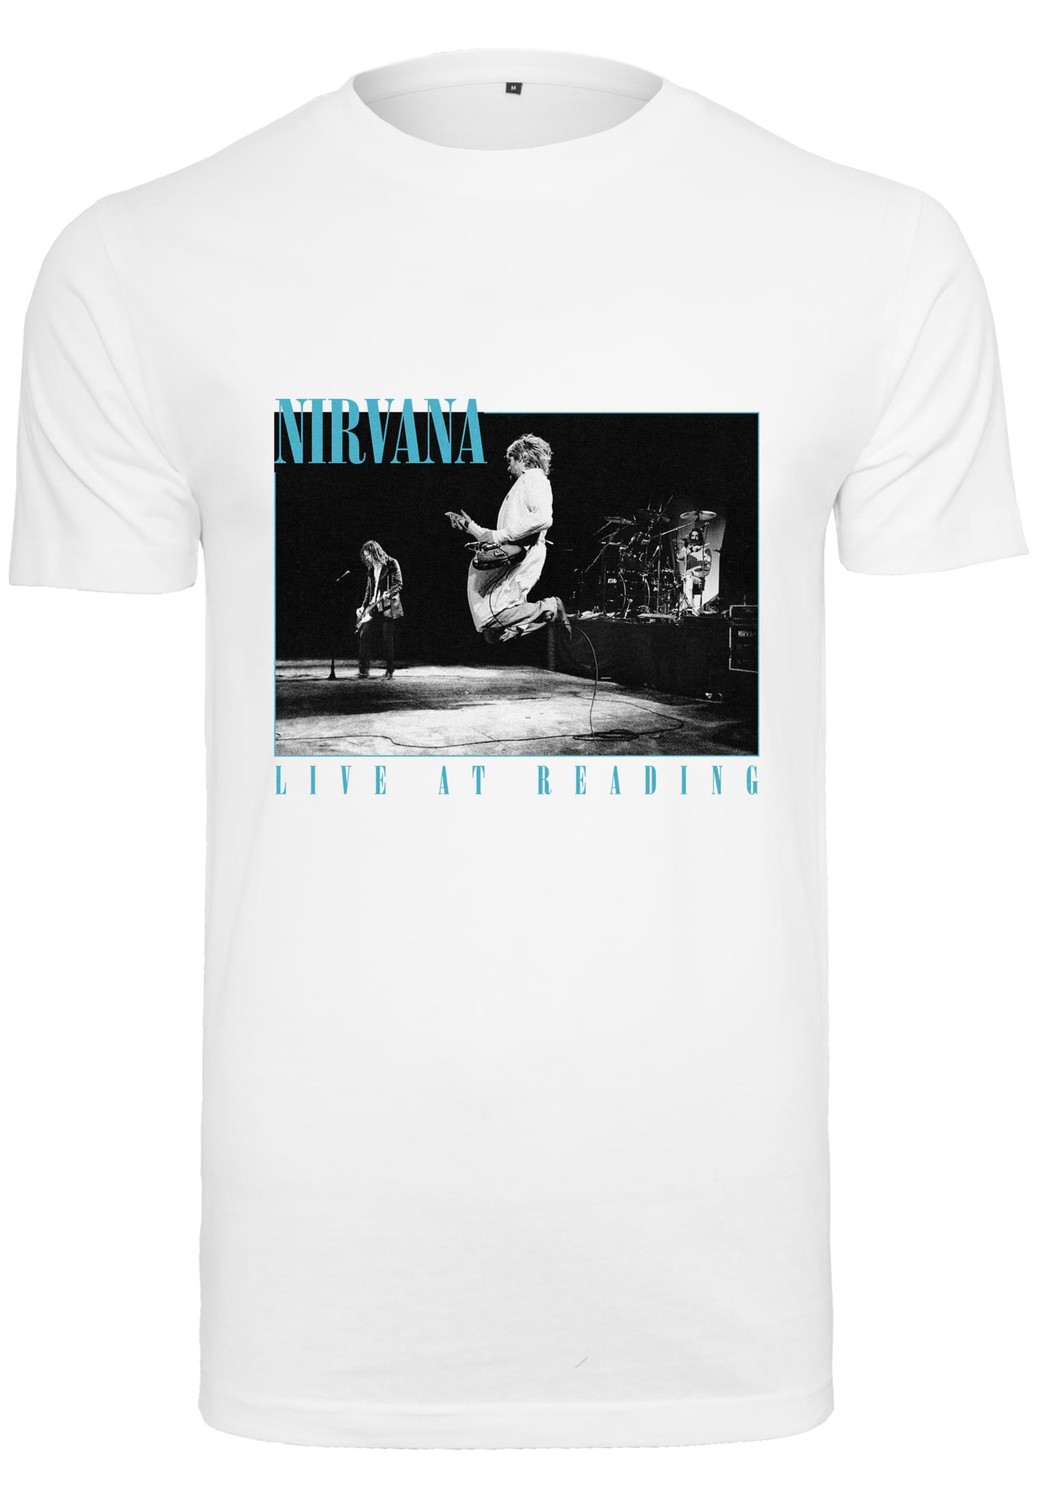 Nirvana Live in Reading Tee white